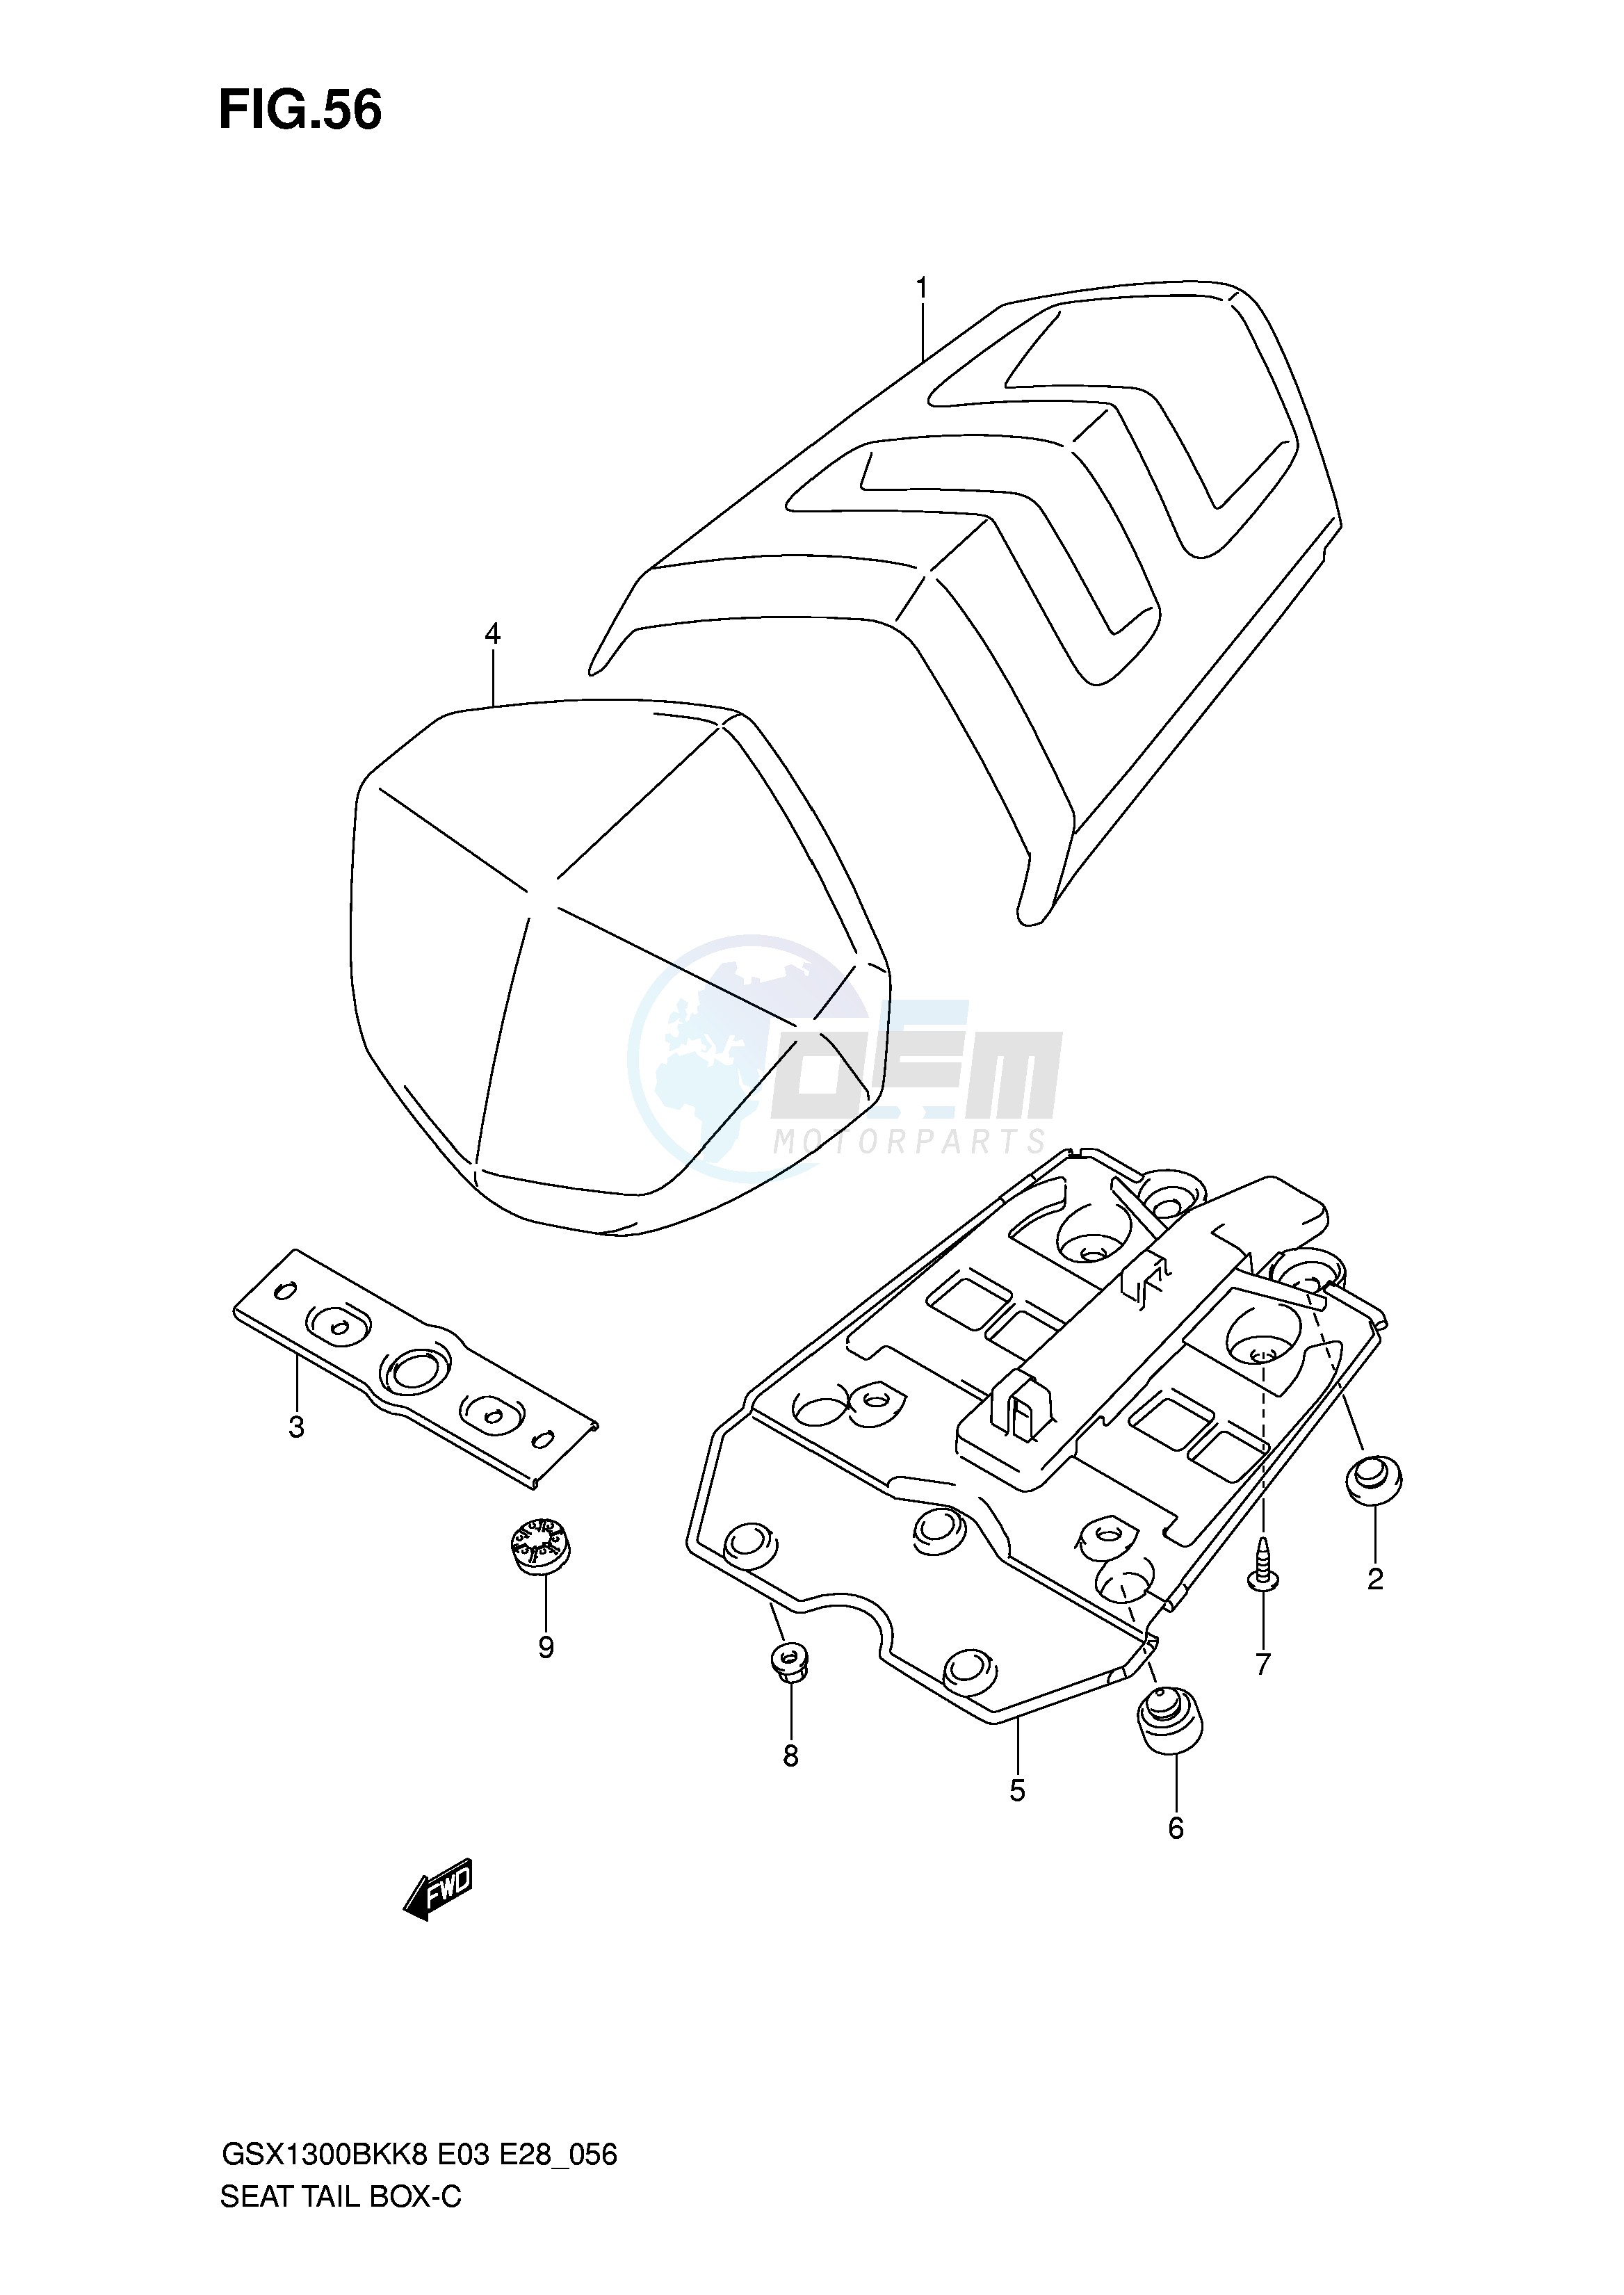 SEAT TAIL BOX blueprint